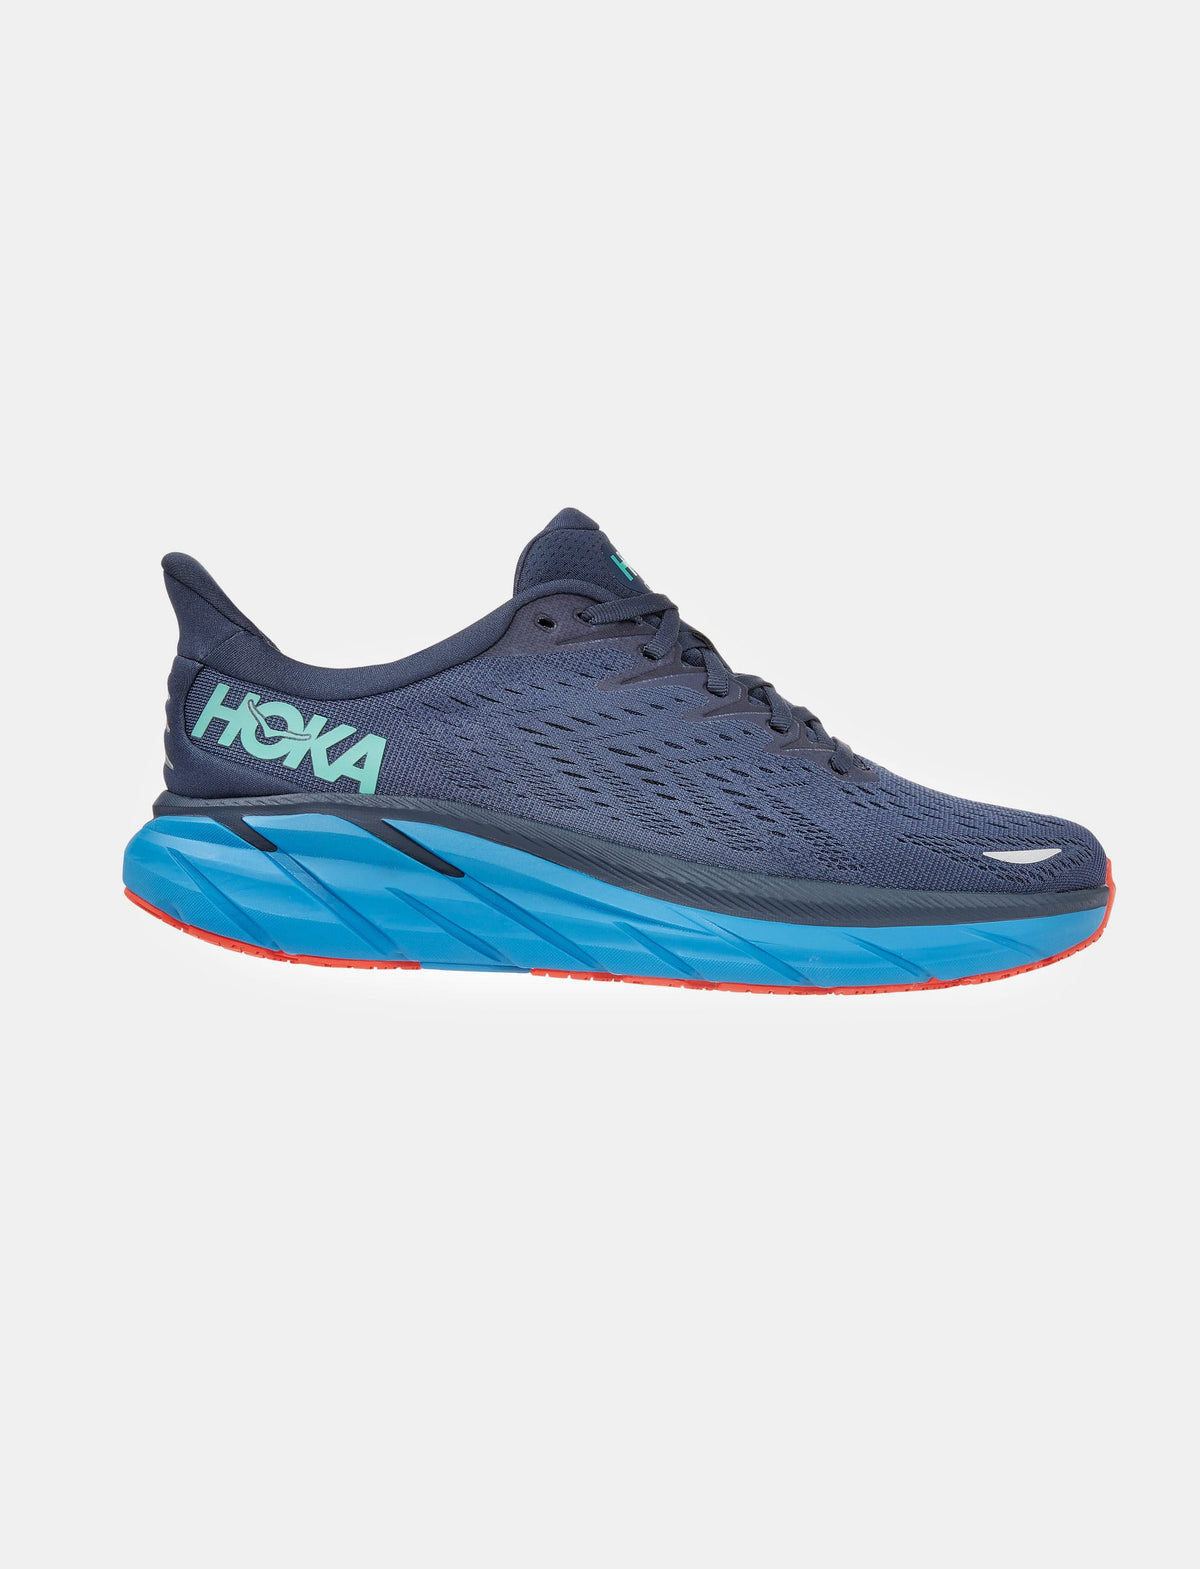 Hoka Clifton 8 - נעלי ספורט גברים הוקה קליפטון 8 בצבע נייבי/כחול-Hoka-42.5-נאקו